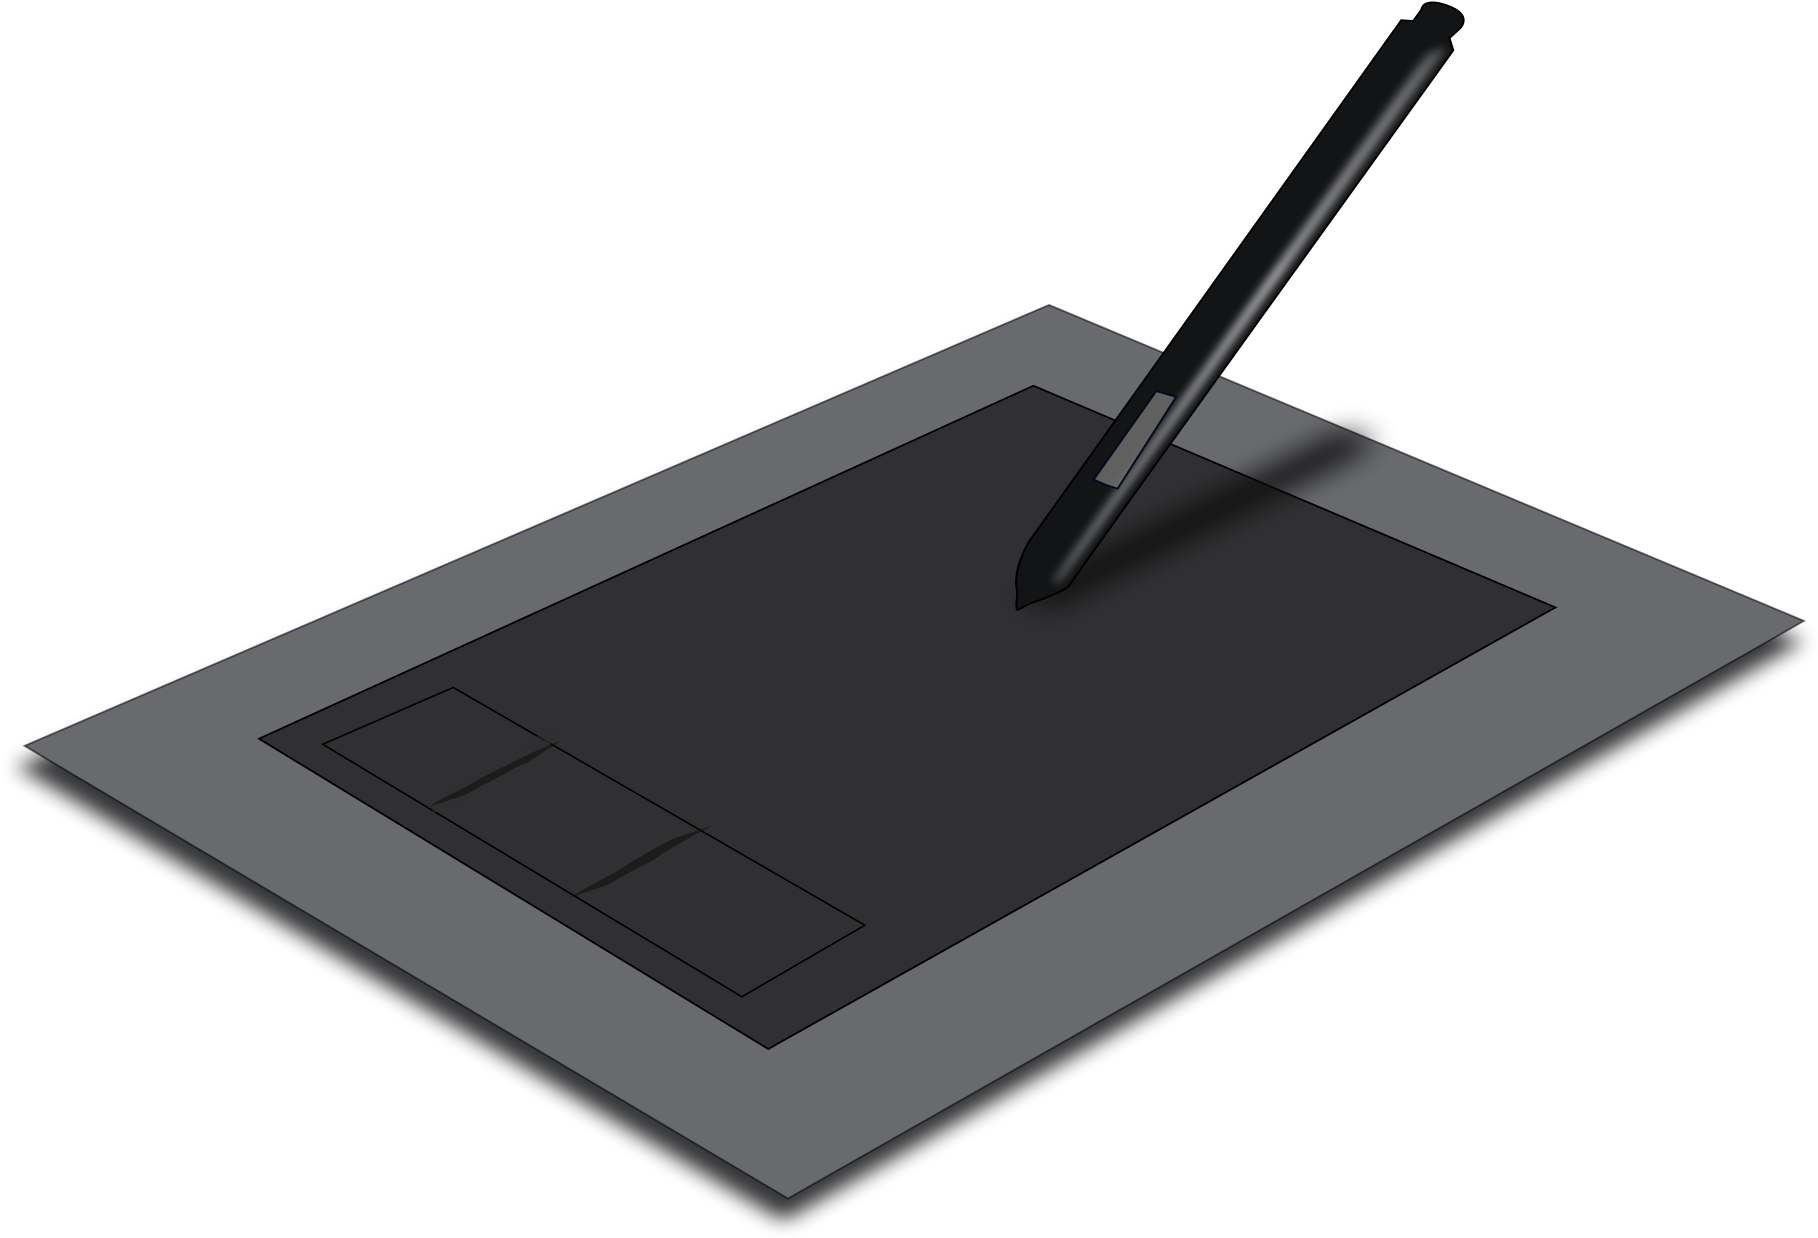 Pen drawing pad. Графический планшет Wacom. Графический планшет Rand Tablet 1964. Рисунки на графическом планшете Wacom.